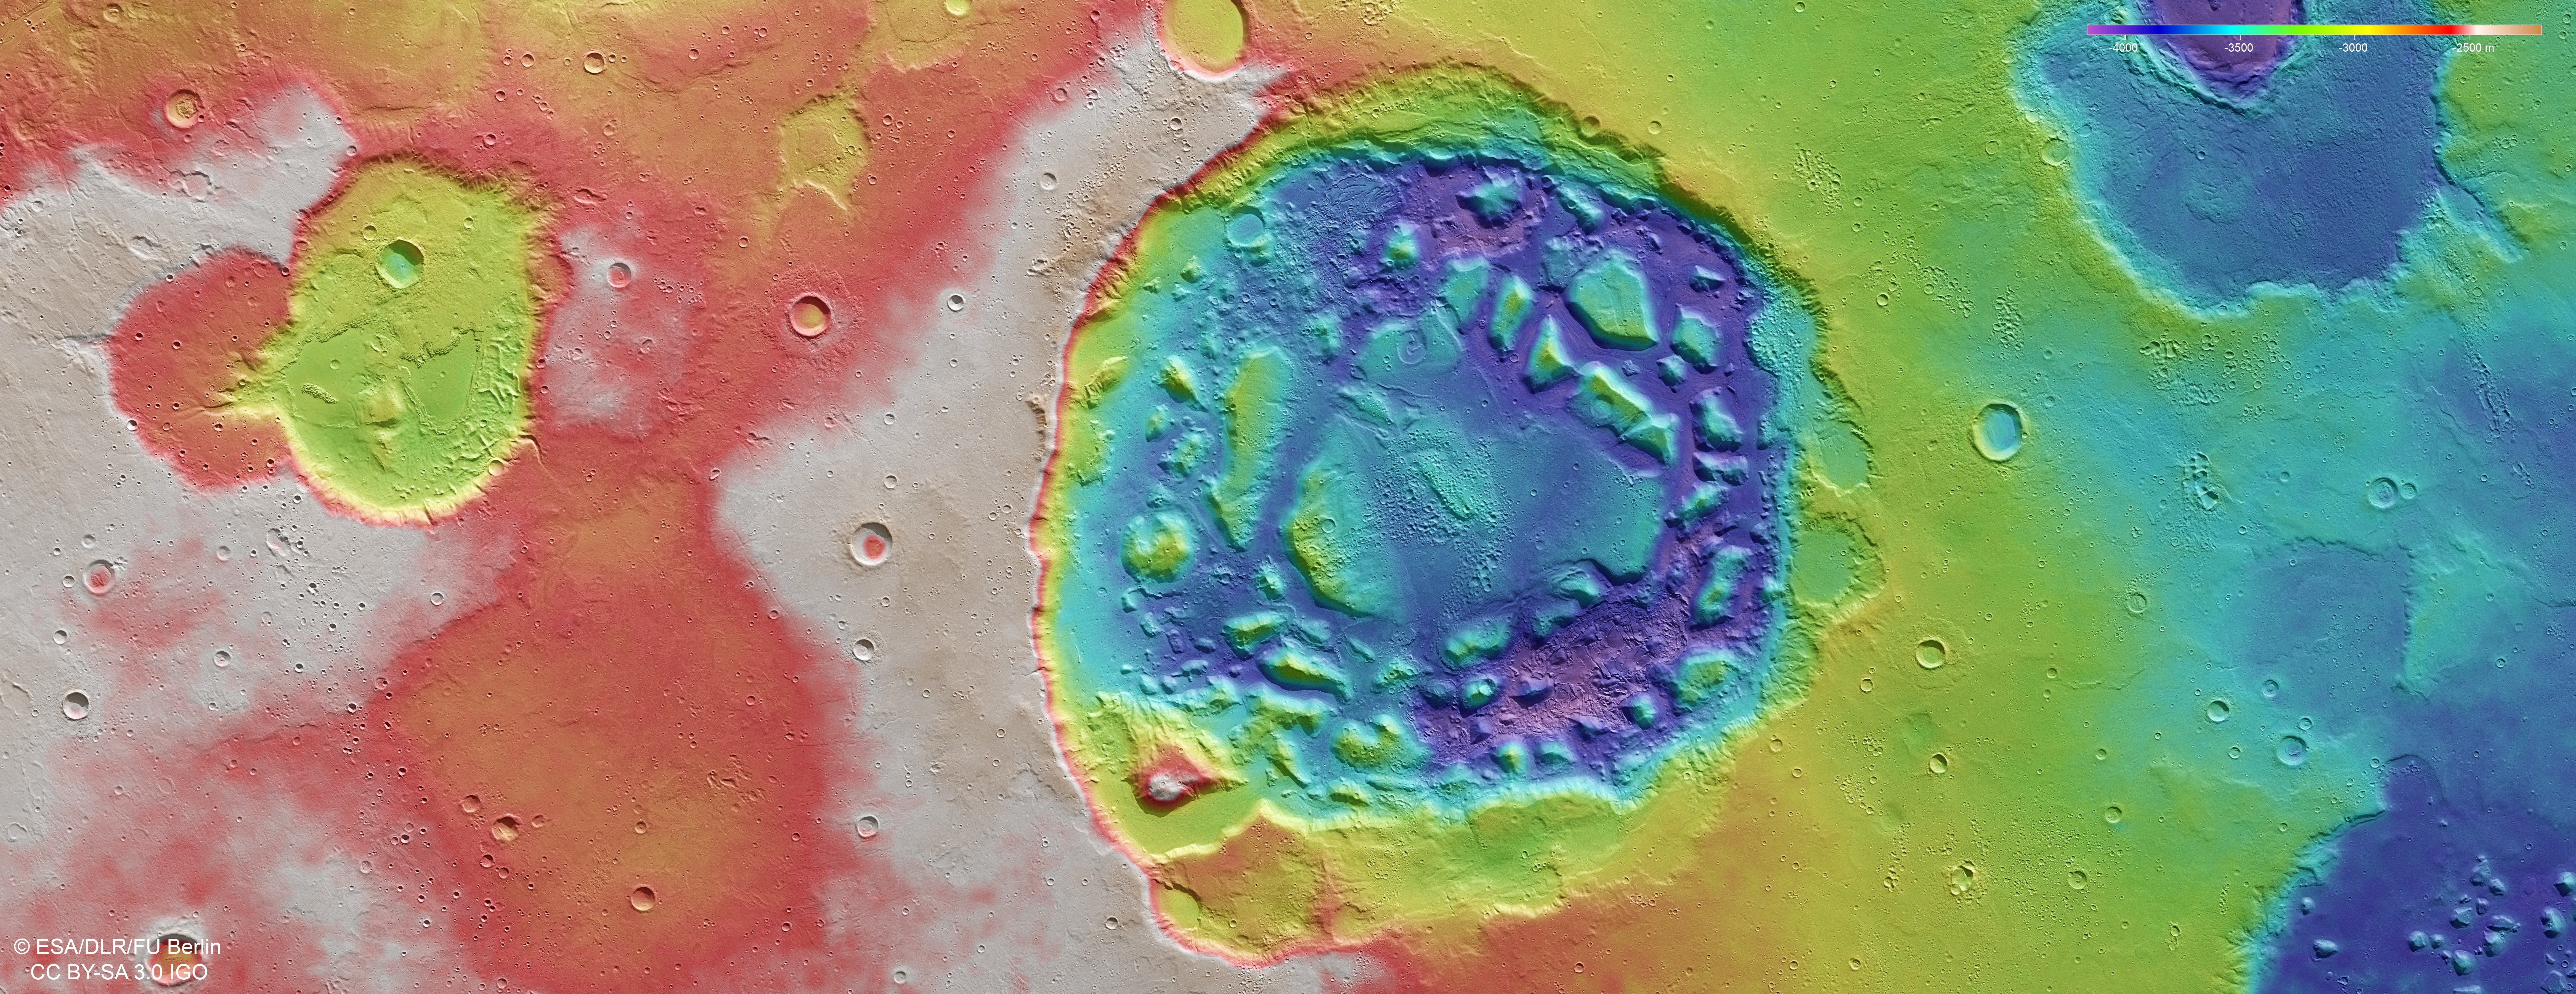 Marte, cratera (Foto: ESA )